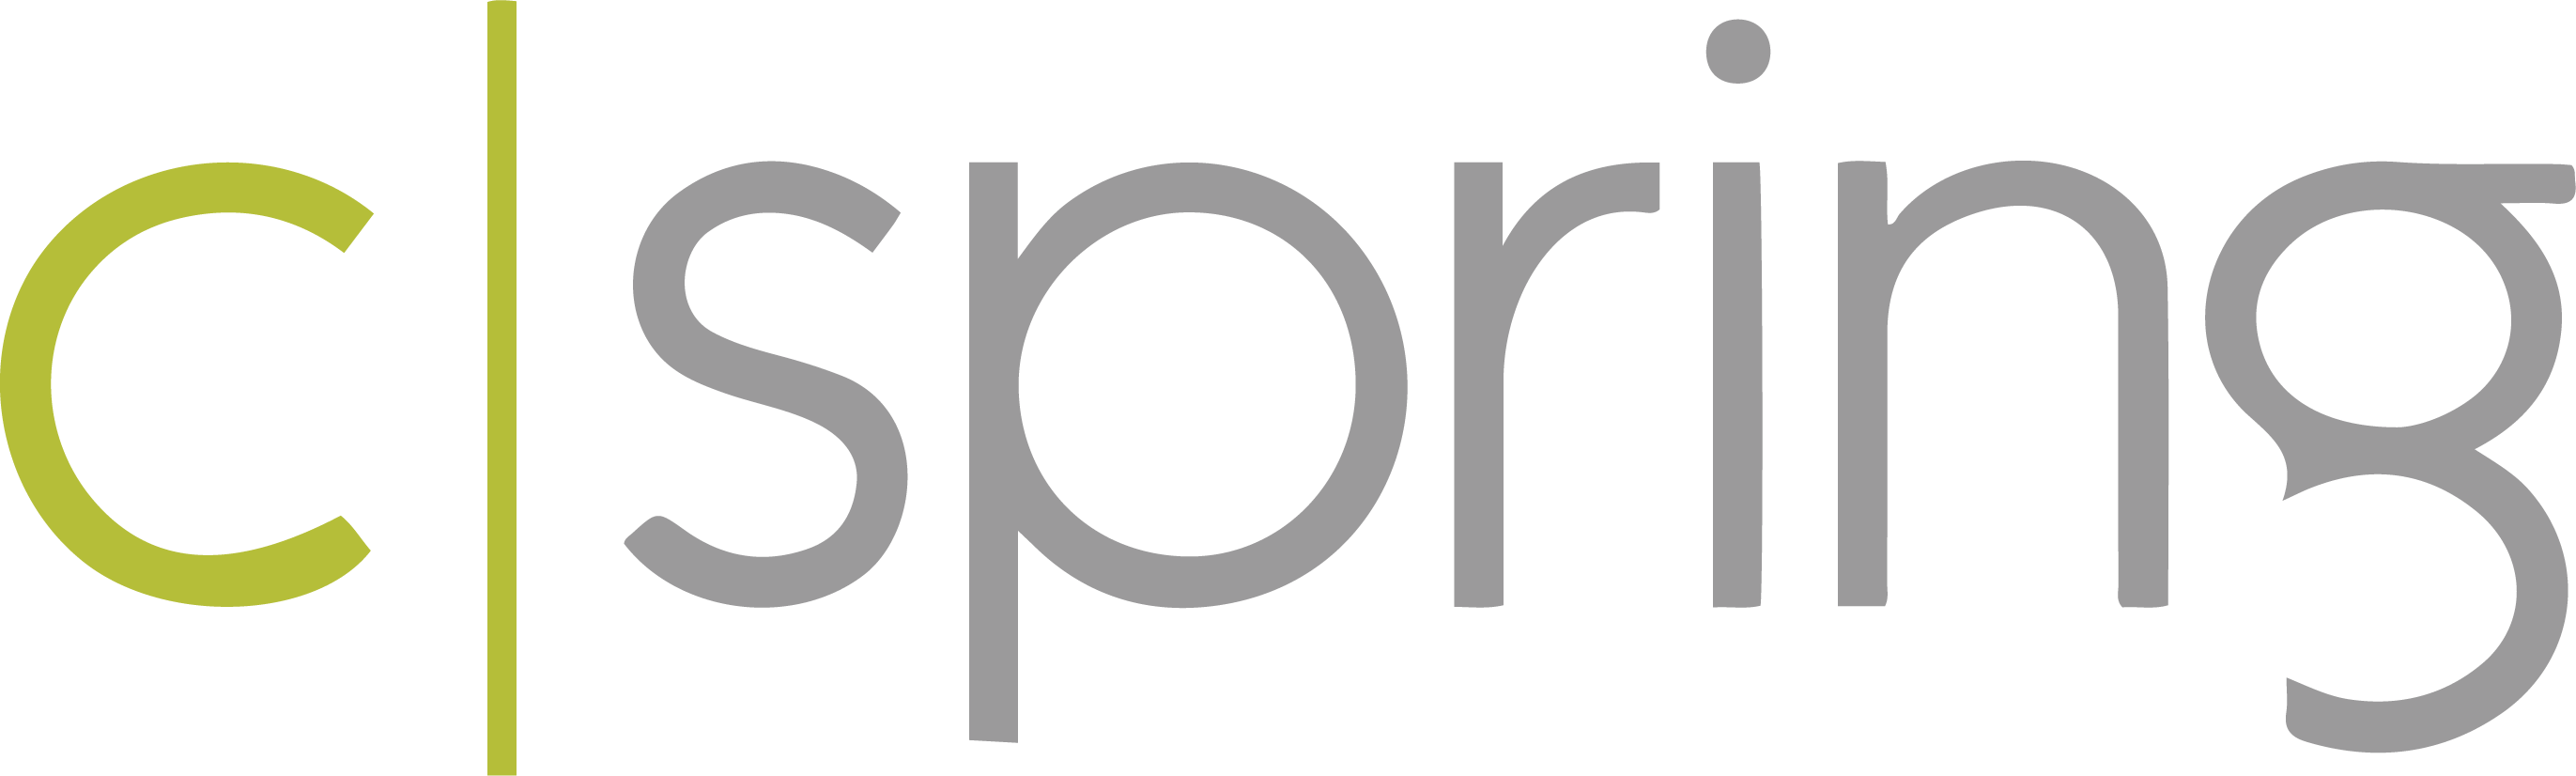 CSpring logo